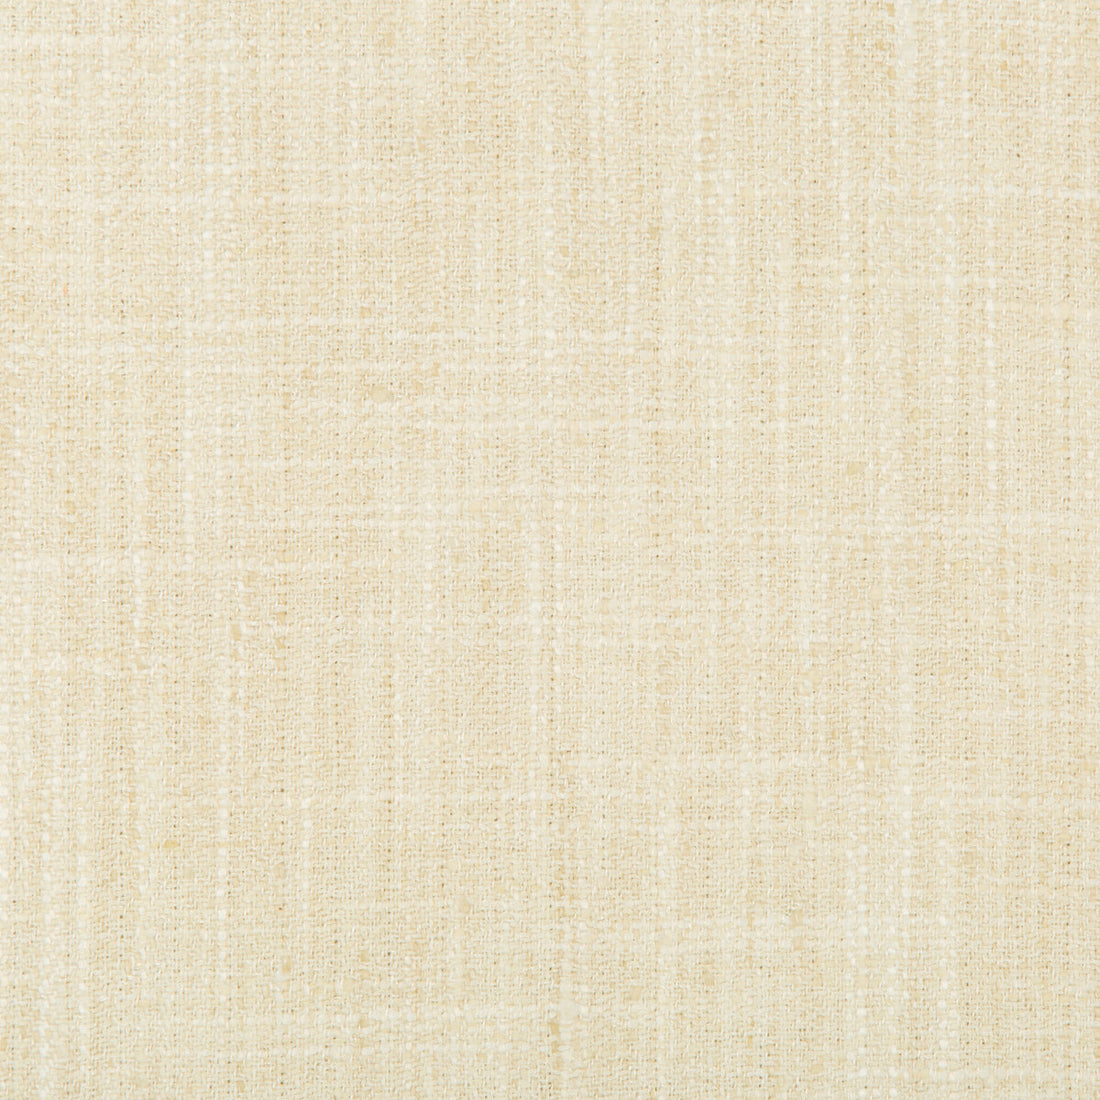 Kravet Smart fabric in 34088-116 color - pattern 34088.116.0 - by Kravet Smart